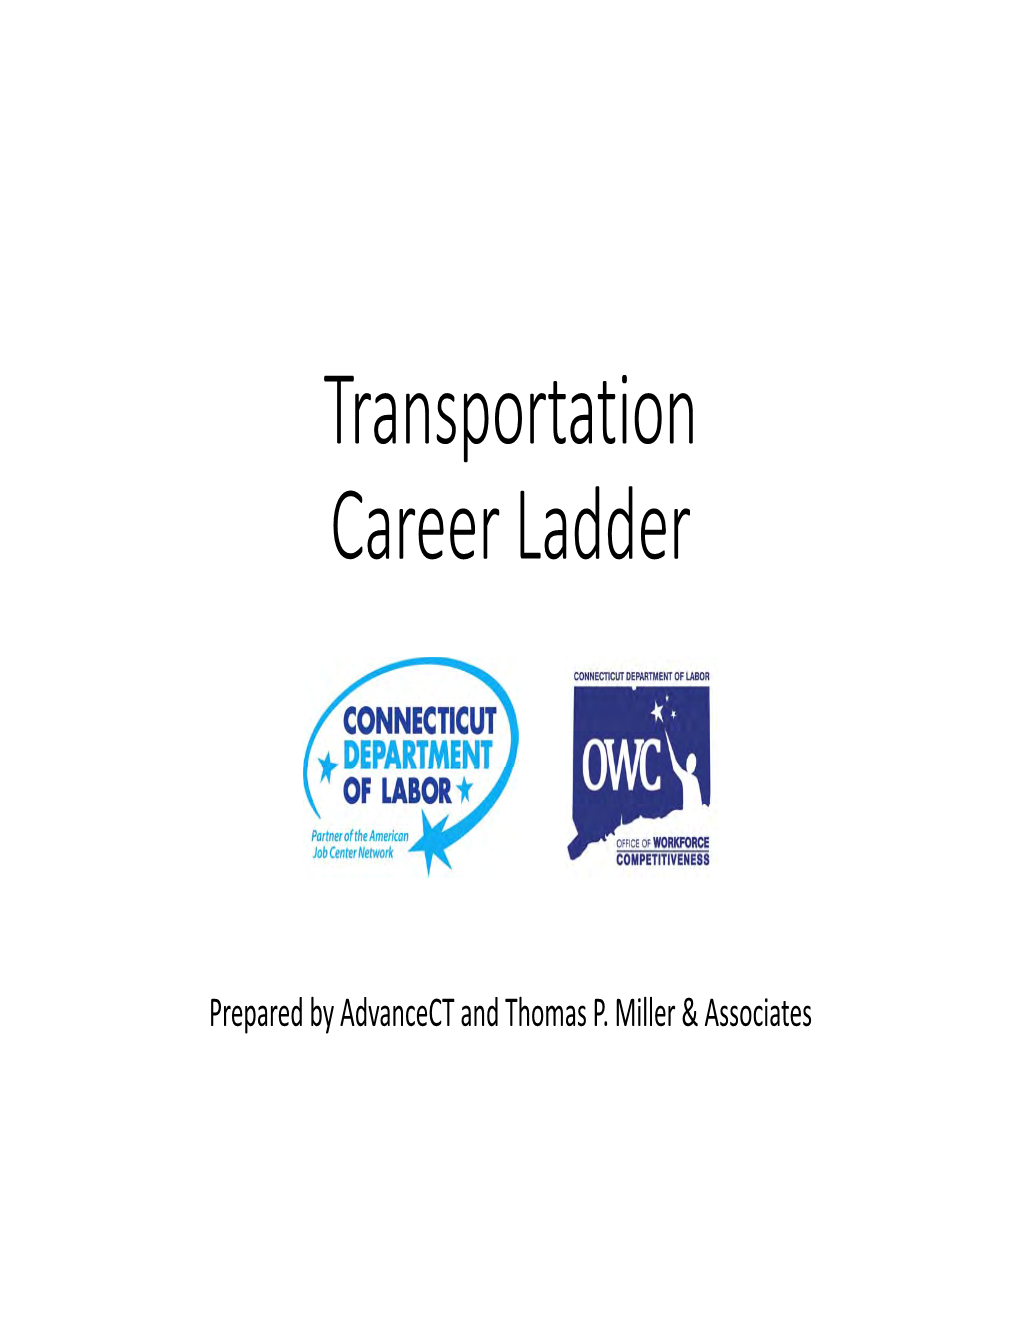 Transportation Career Ladder